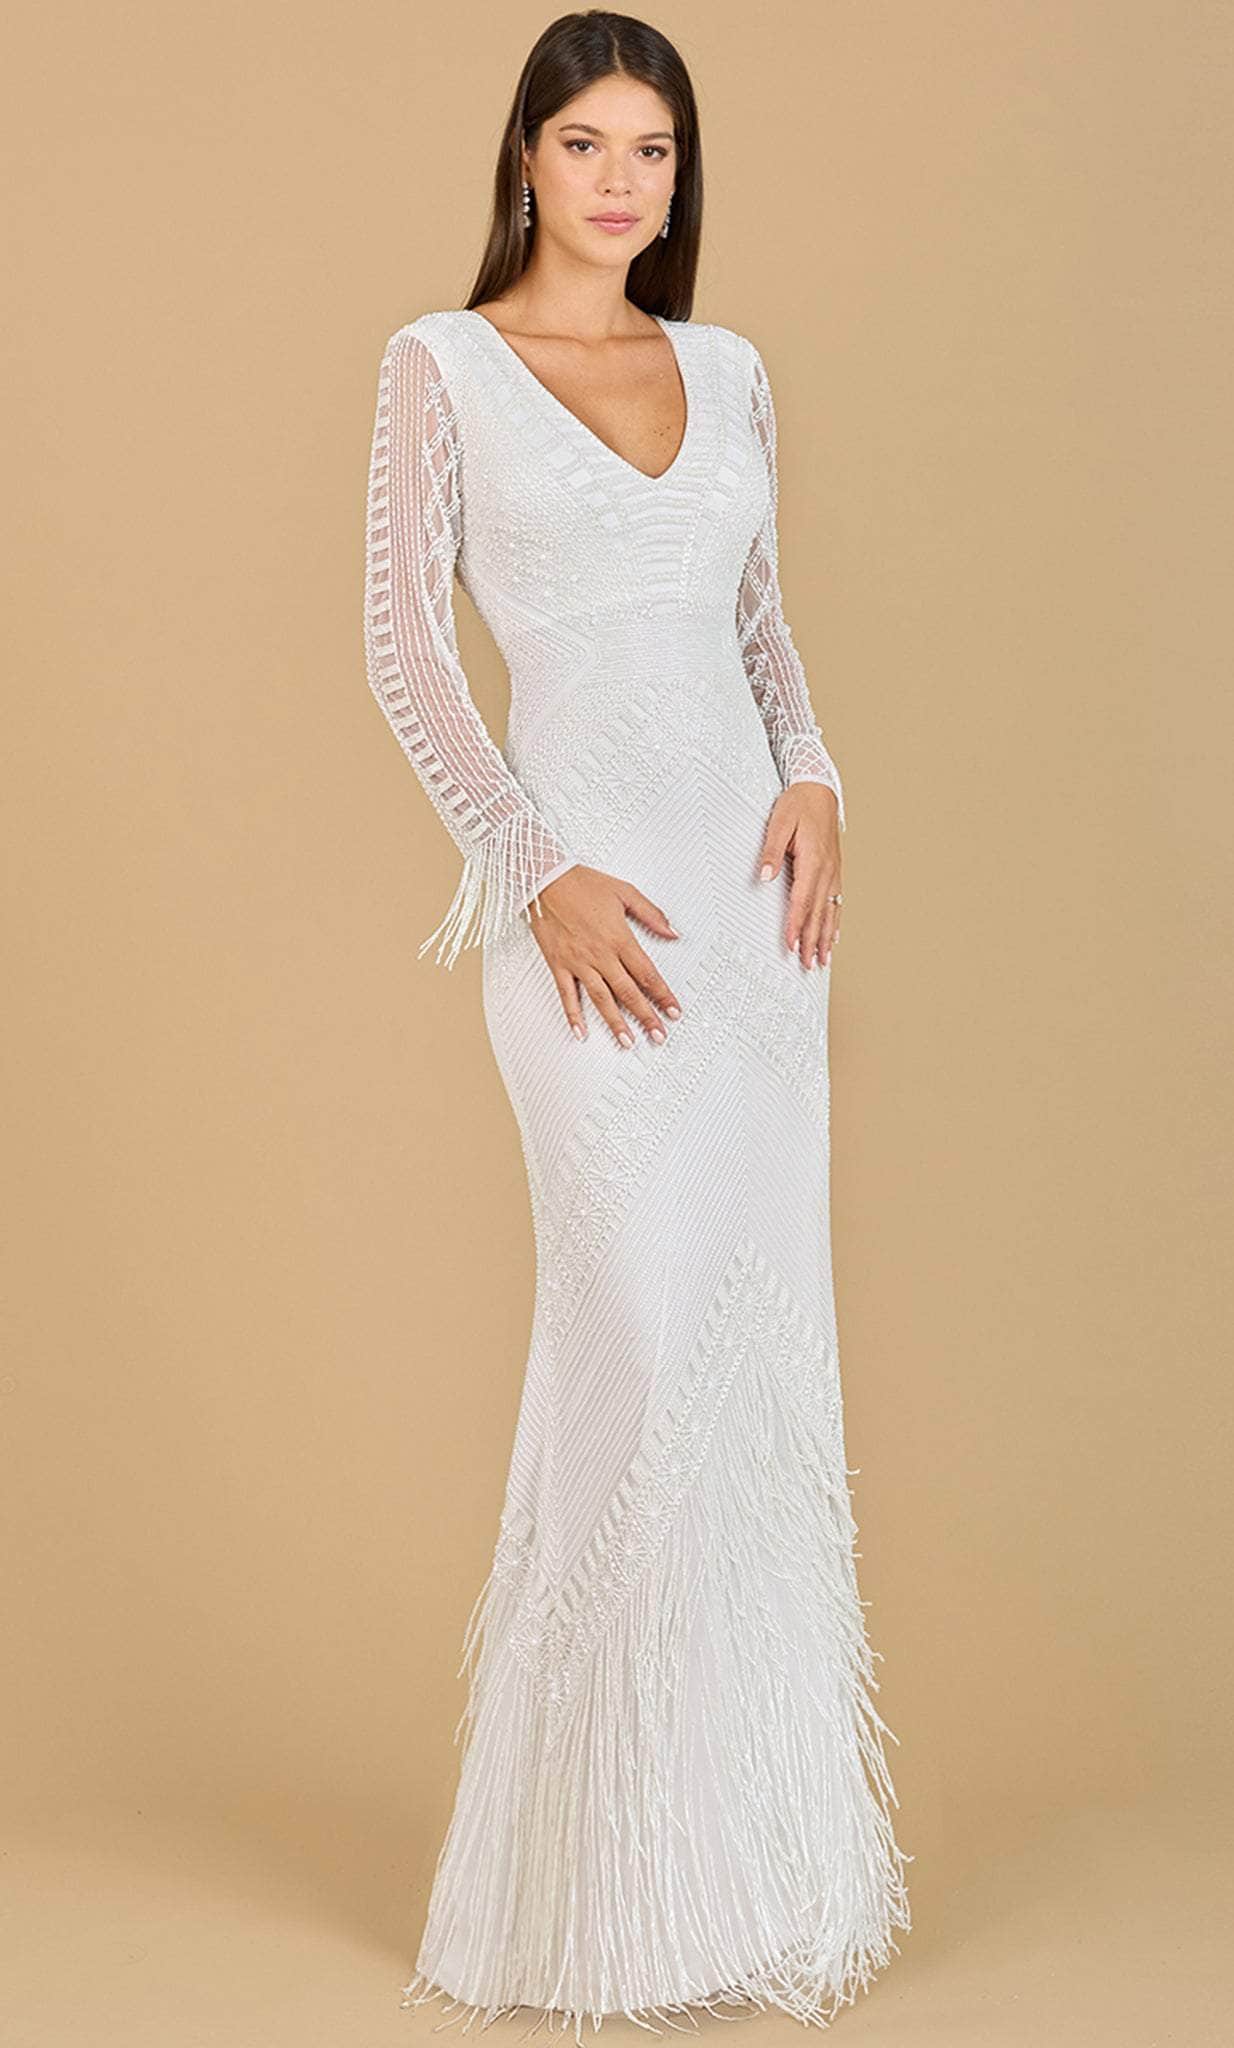 Lara Dresses 51139 - Long Sleeved Formal Gown
